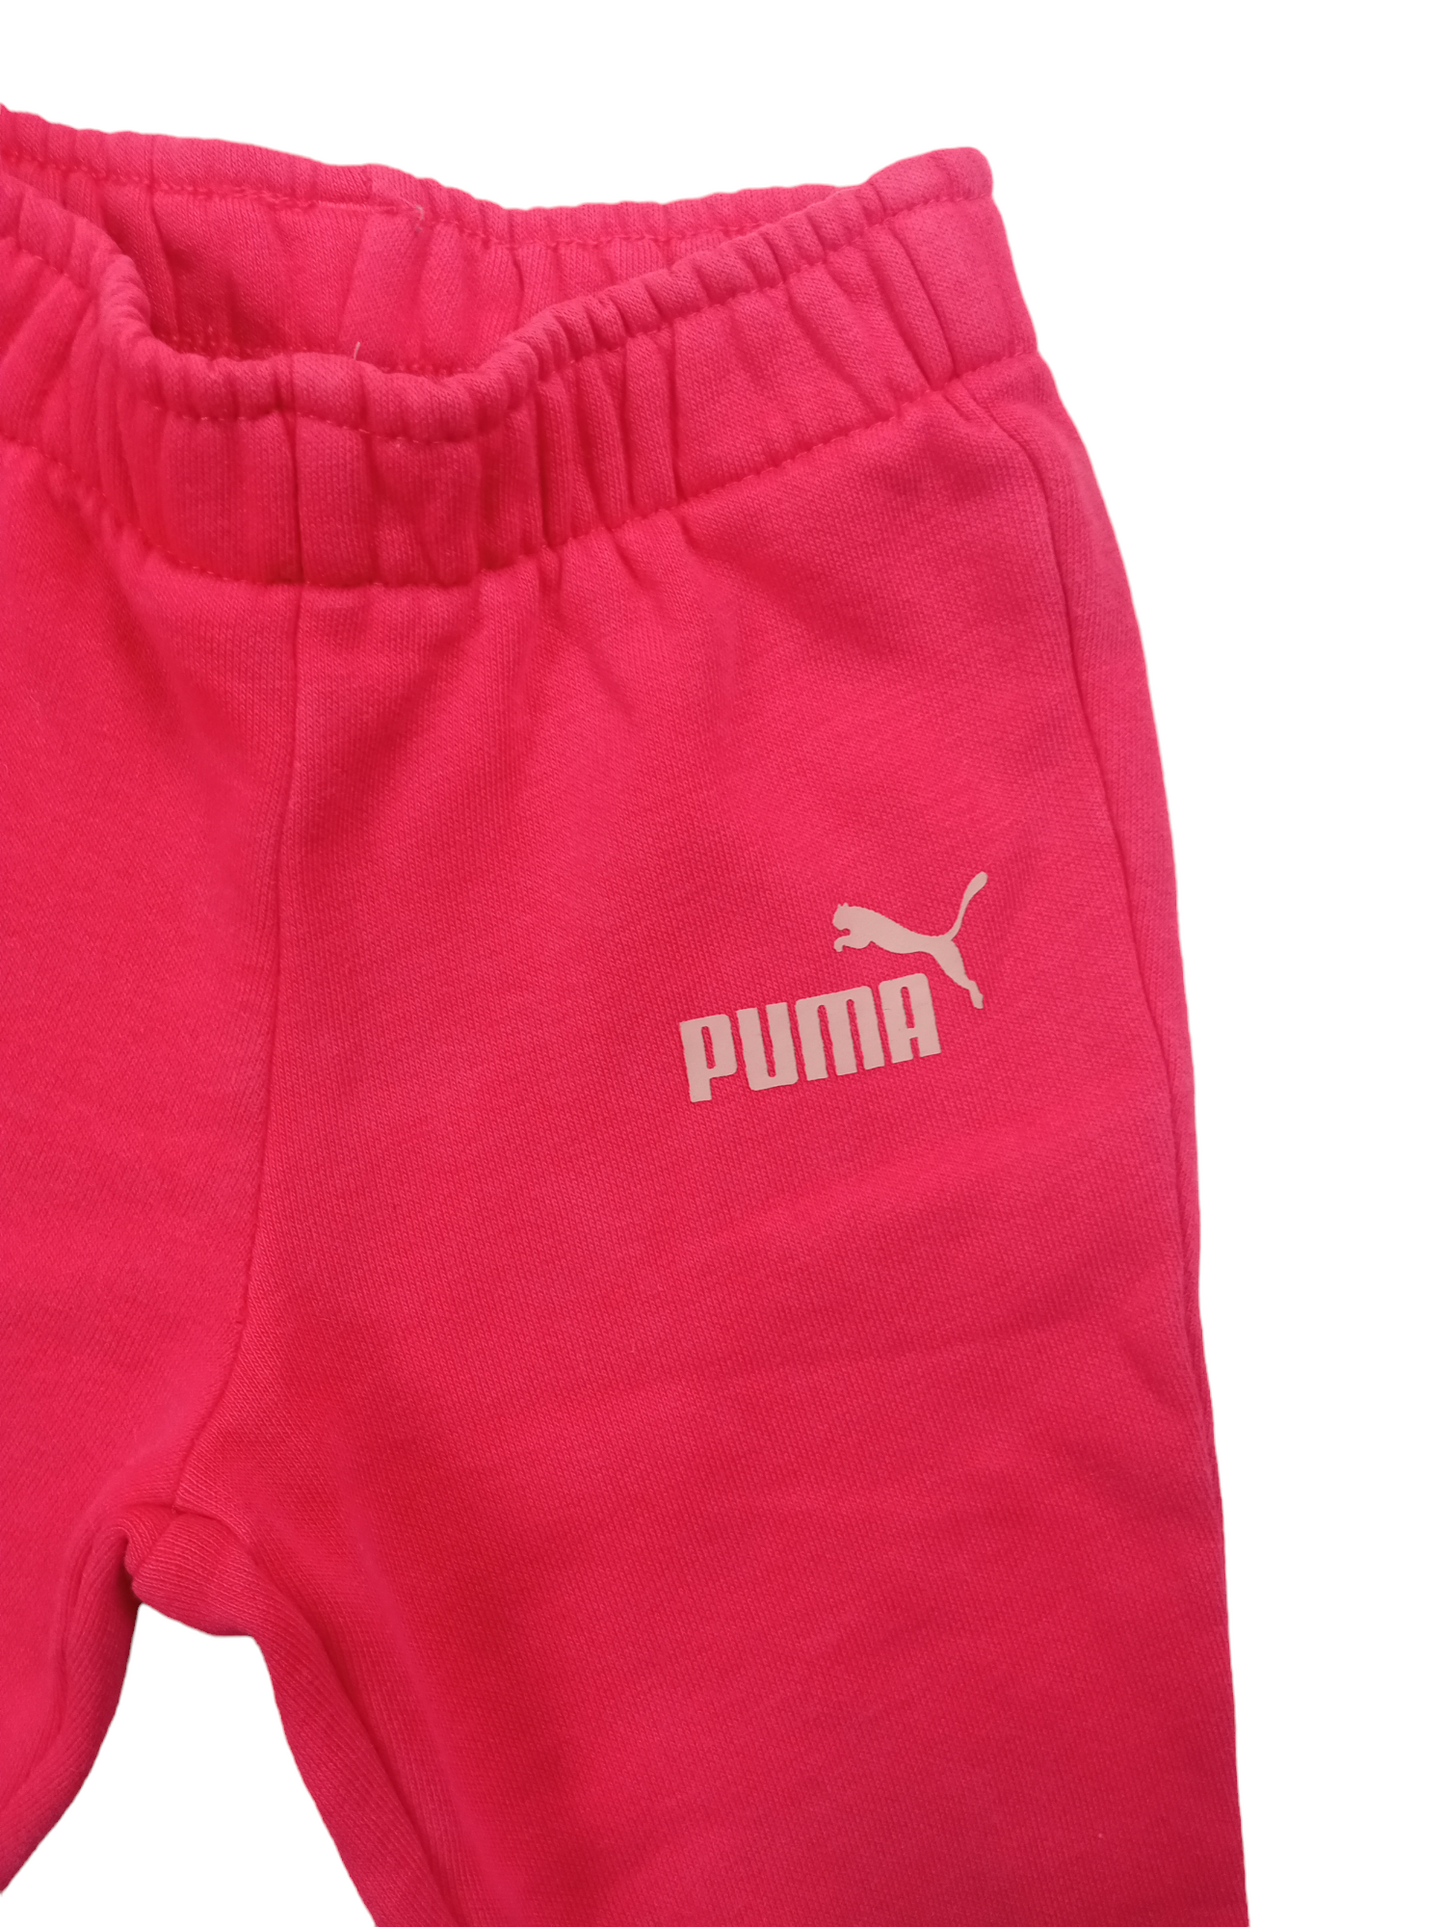 Conjunto Puma / 6-9 meses